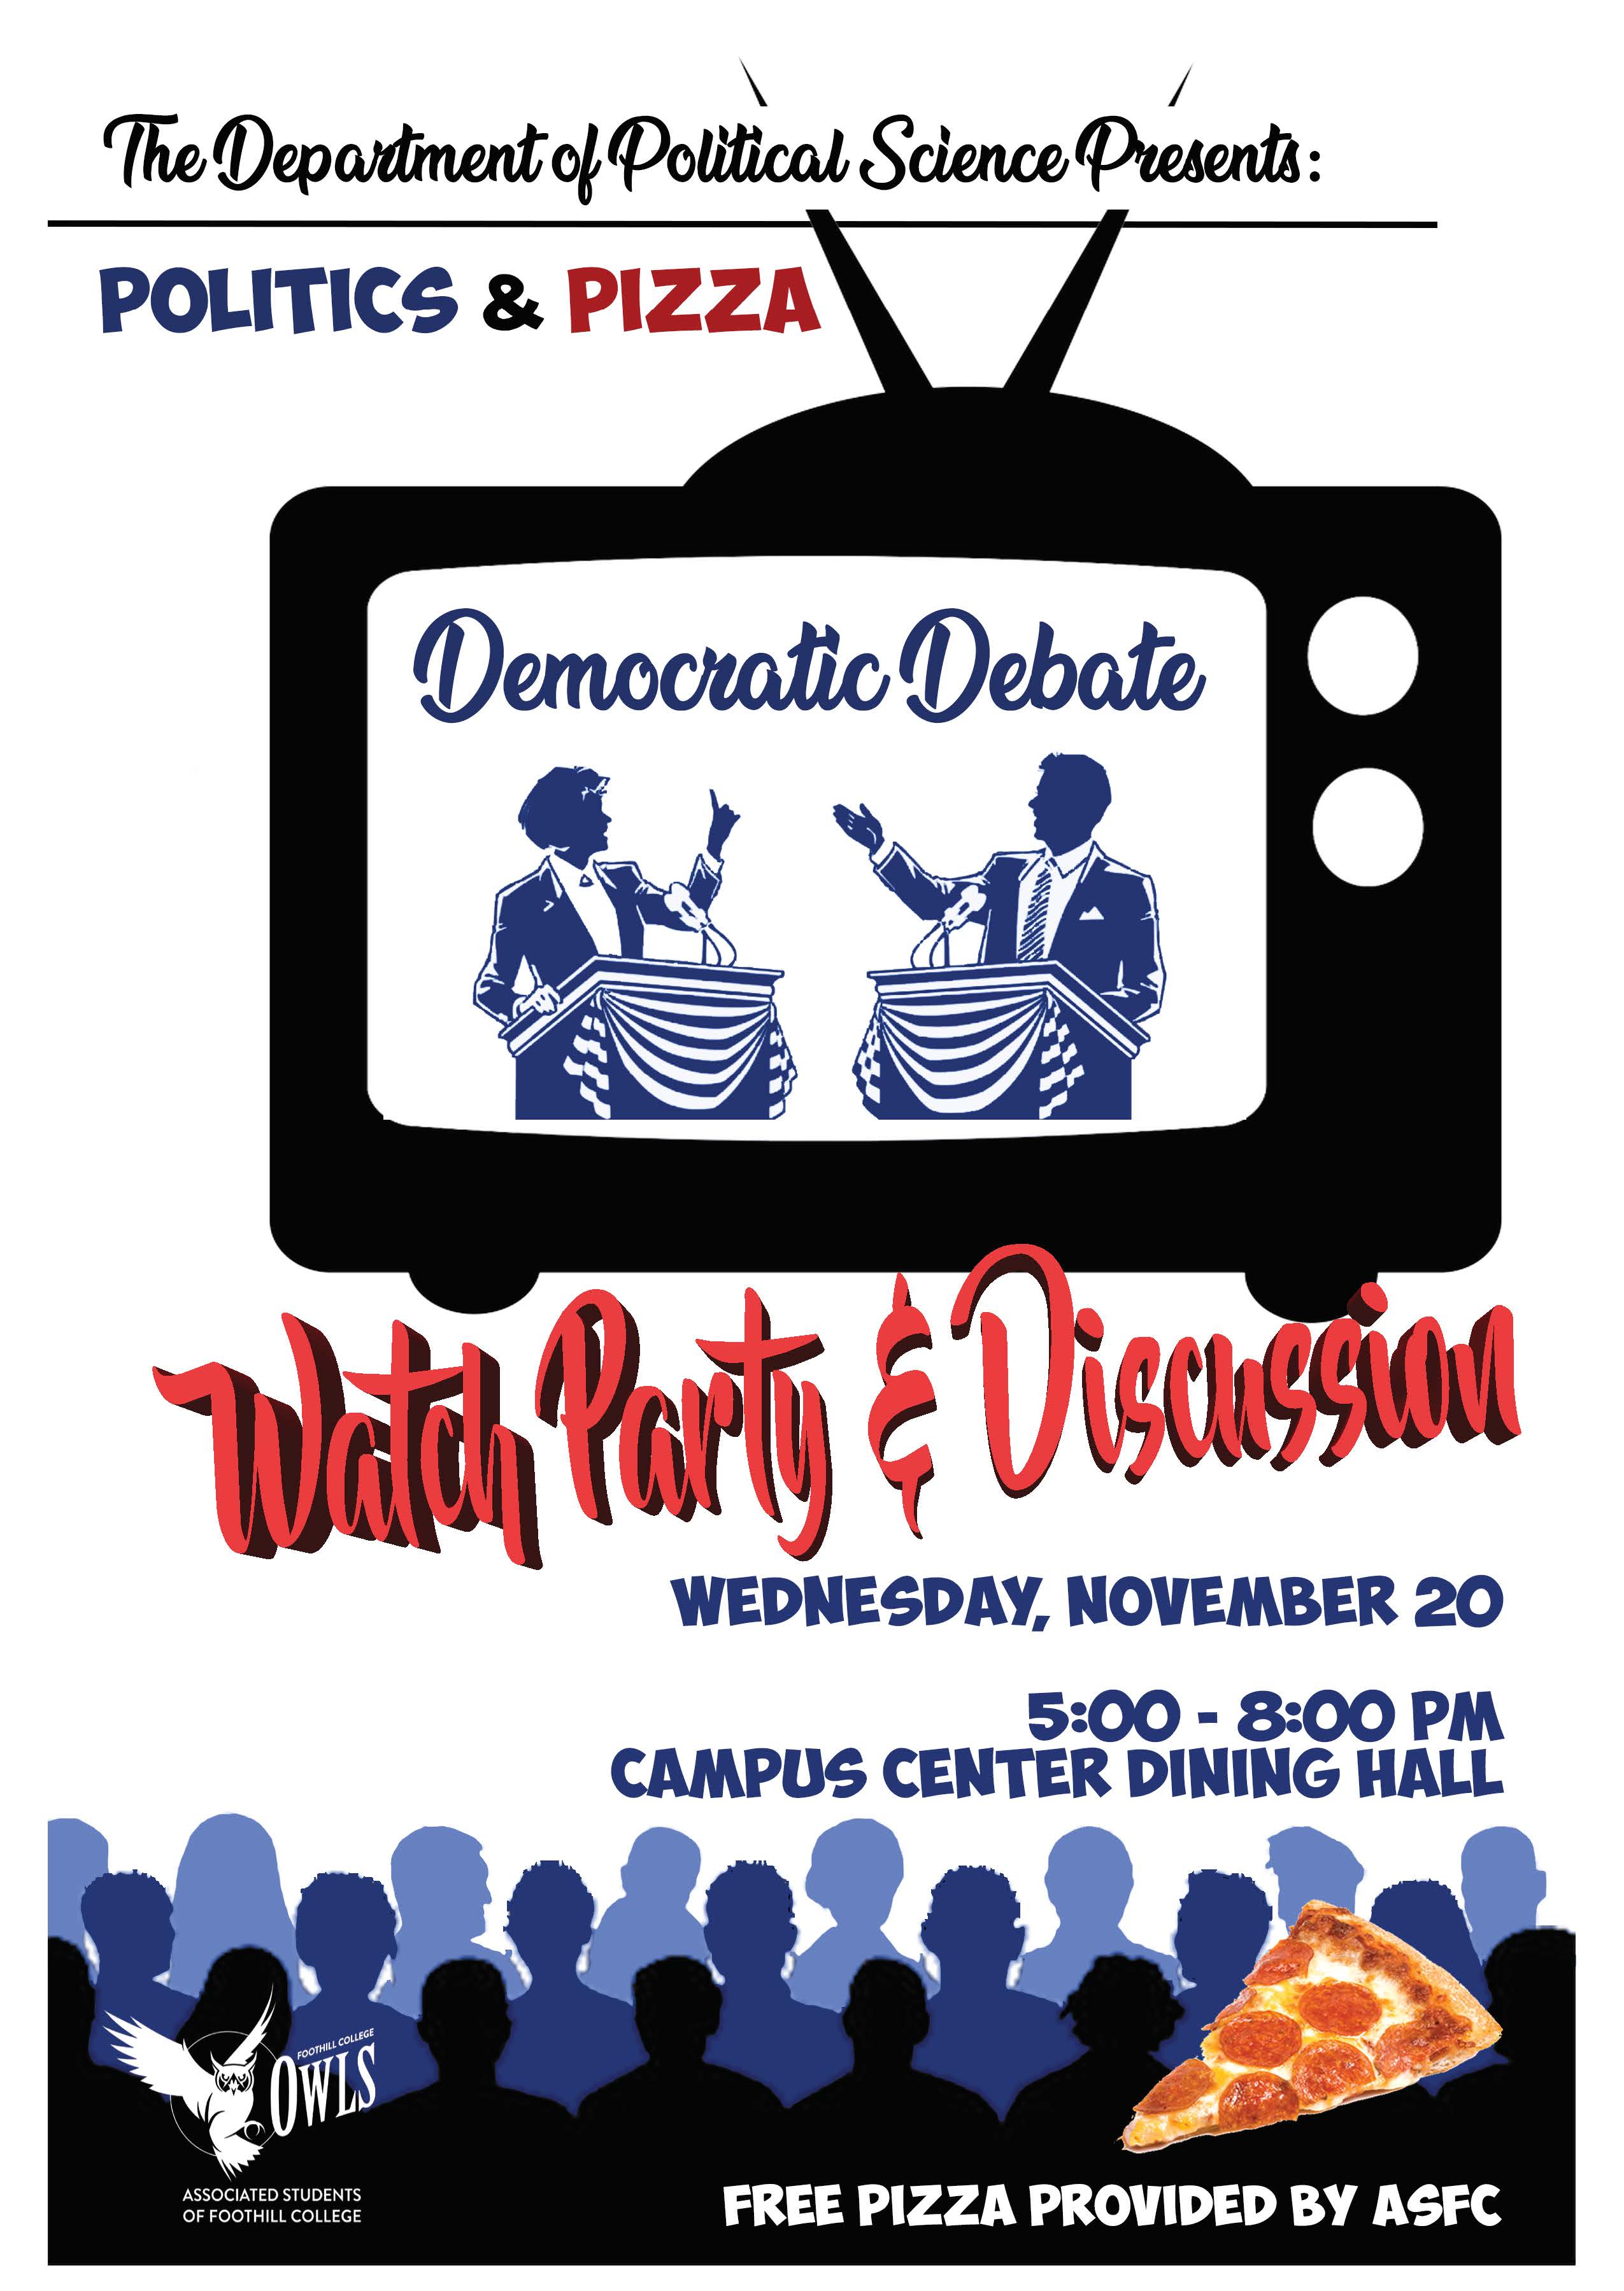 November 20 Dining Hall Democratic Debate